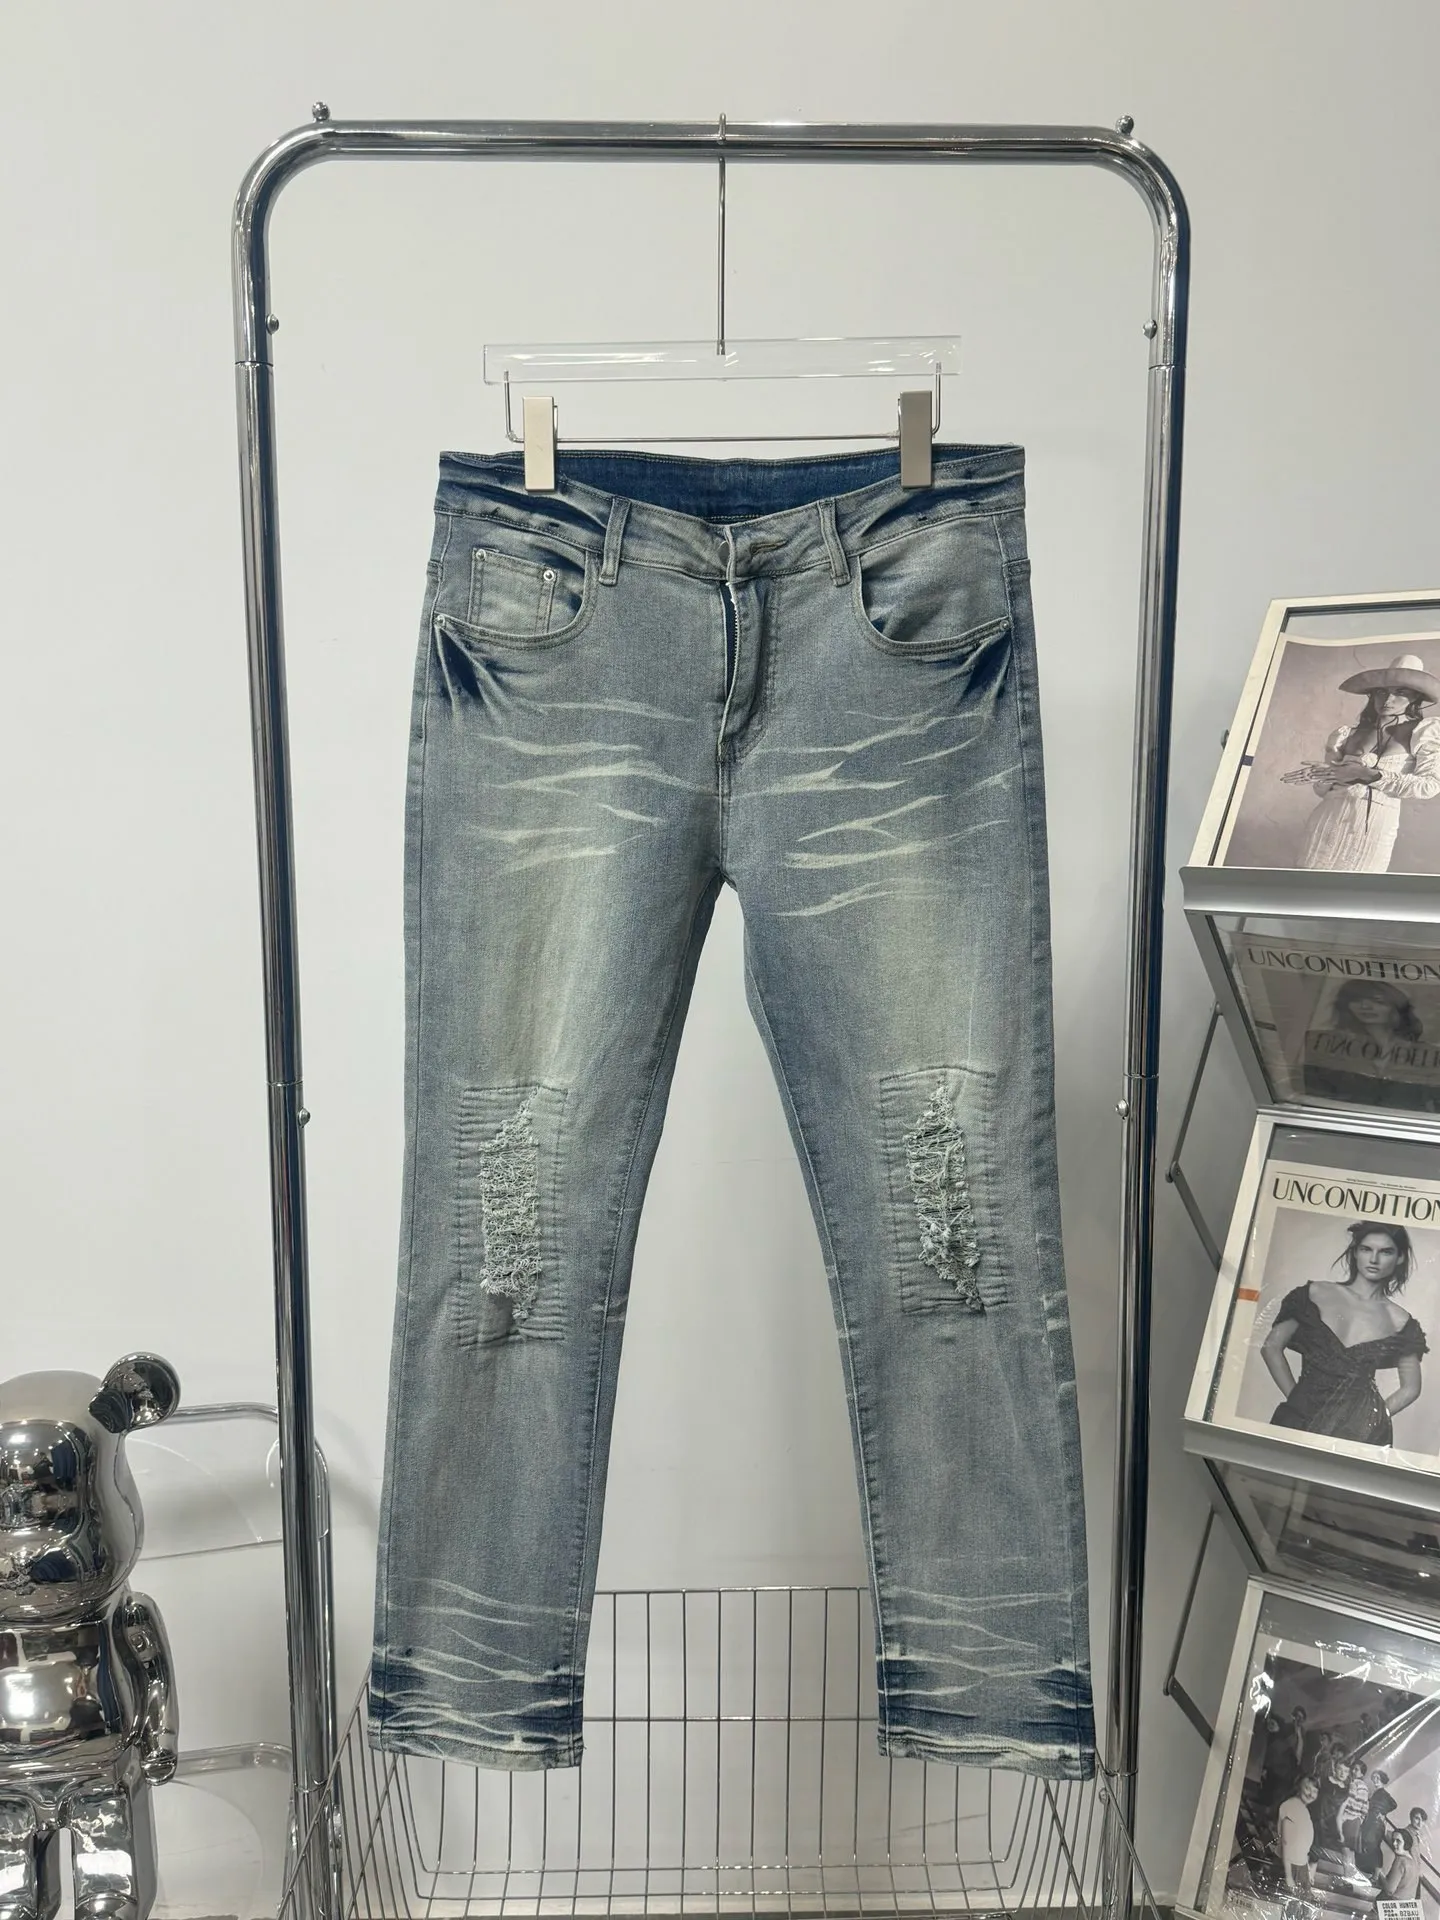 Frauen schwarze gestapelte Hosen Männer dünne Designer-Jeans Vintage-Waschung solide blau gerade Passform lange lässige Denim-Hose Frühling Sommer Streetwear#A12